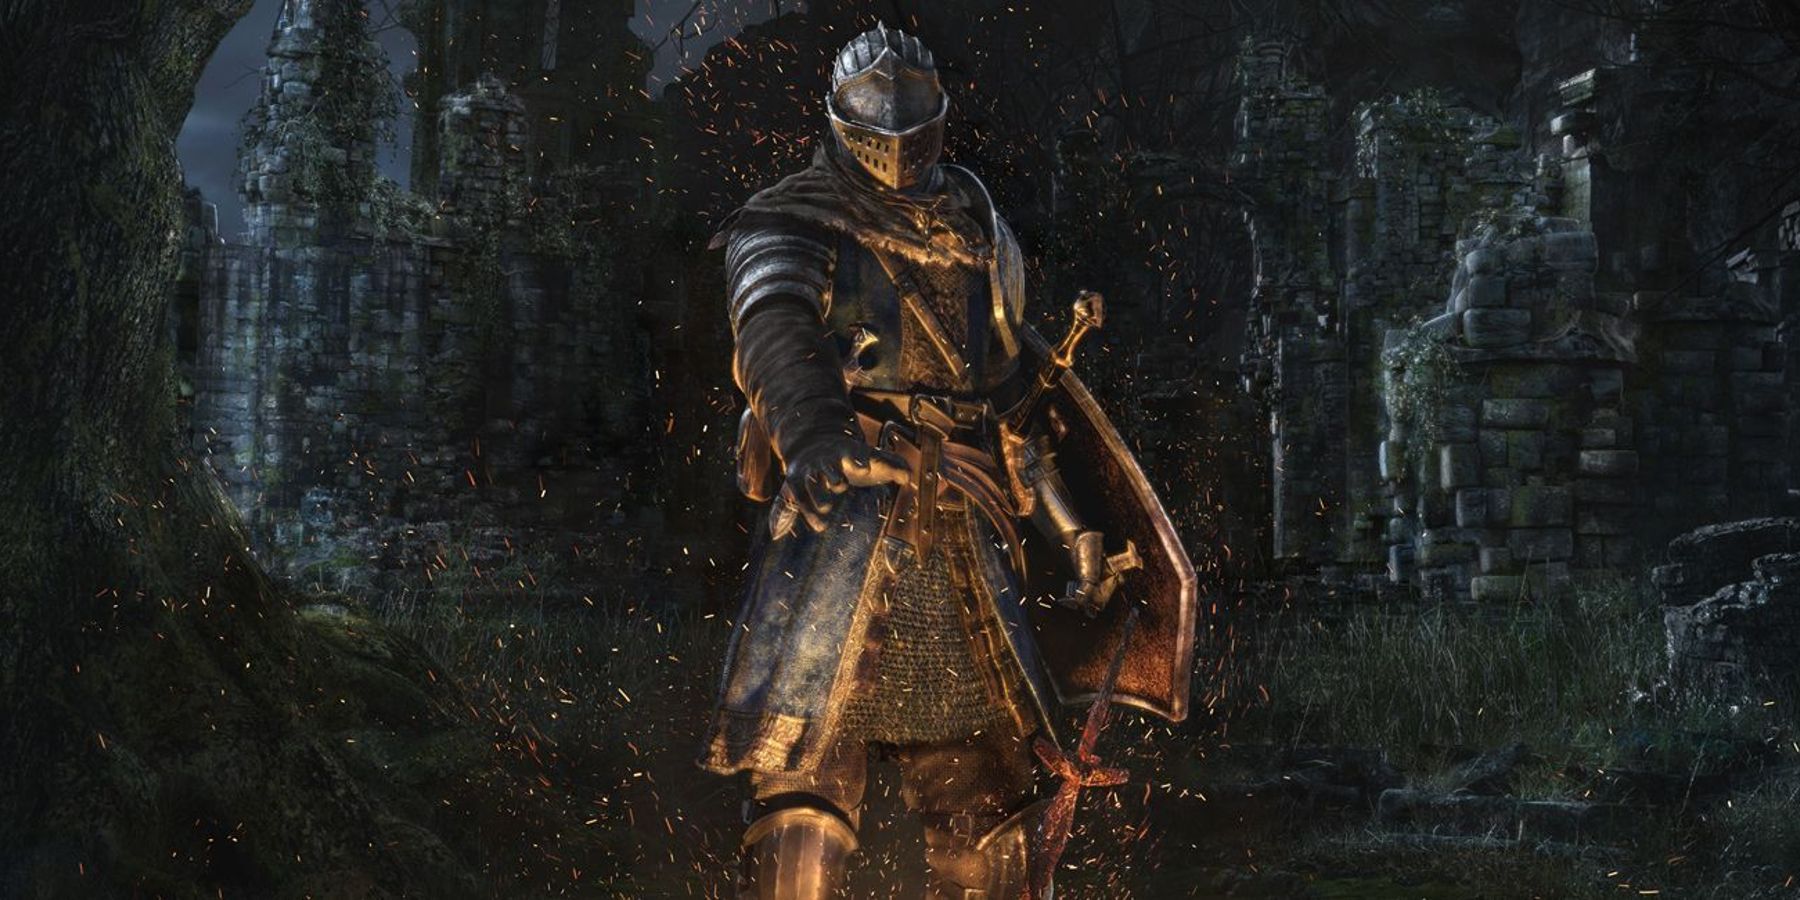 Warrior lighting a bonfire in promo artwork for Dark Souls Remastered